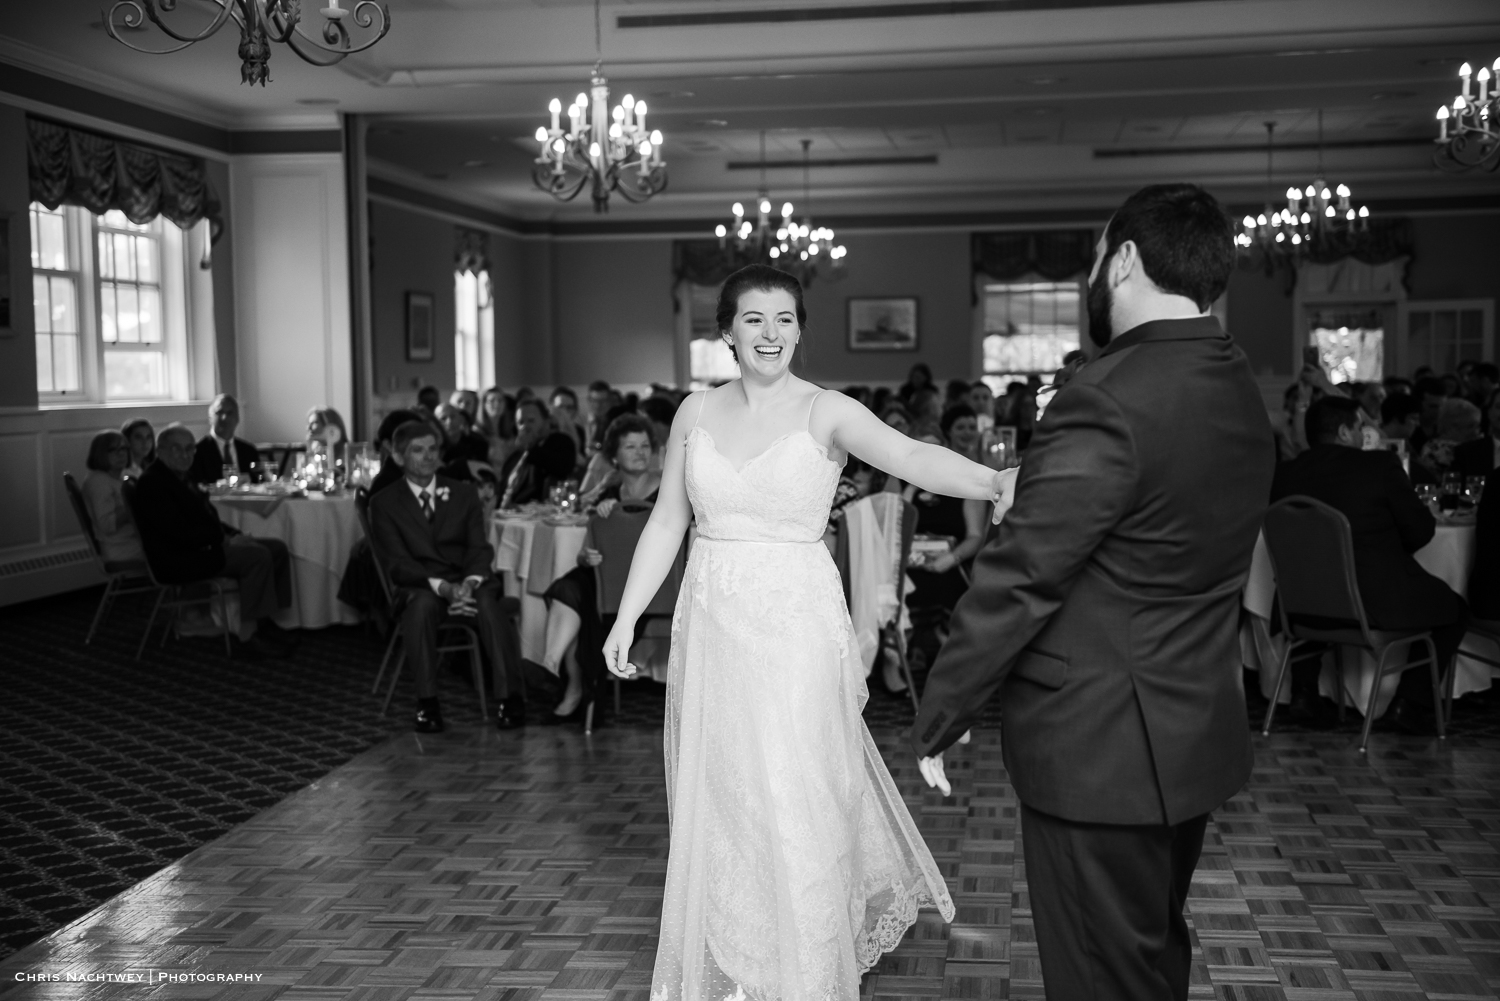 wedding-photos-united-states-coast-guard-academy-chris-nachtwey-photography-2019-25.jpg